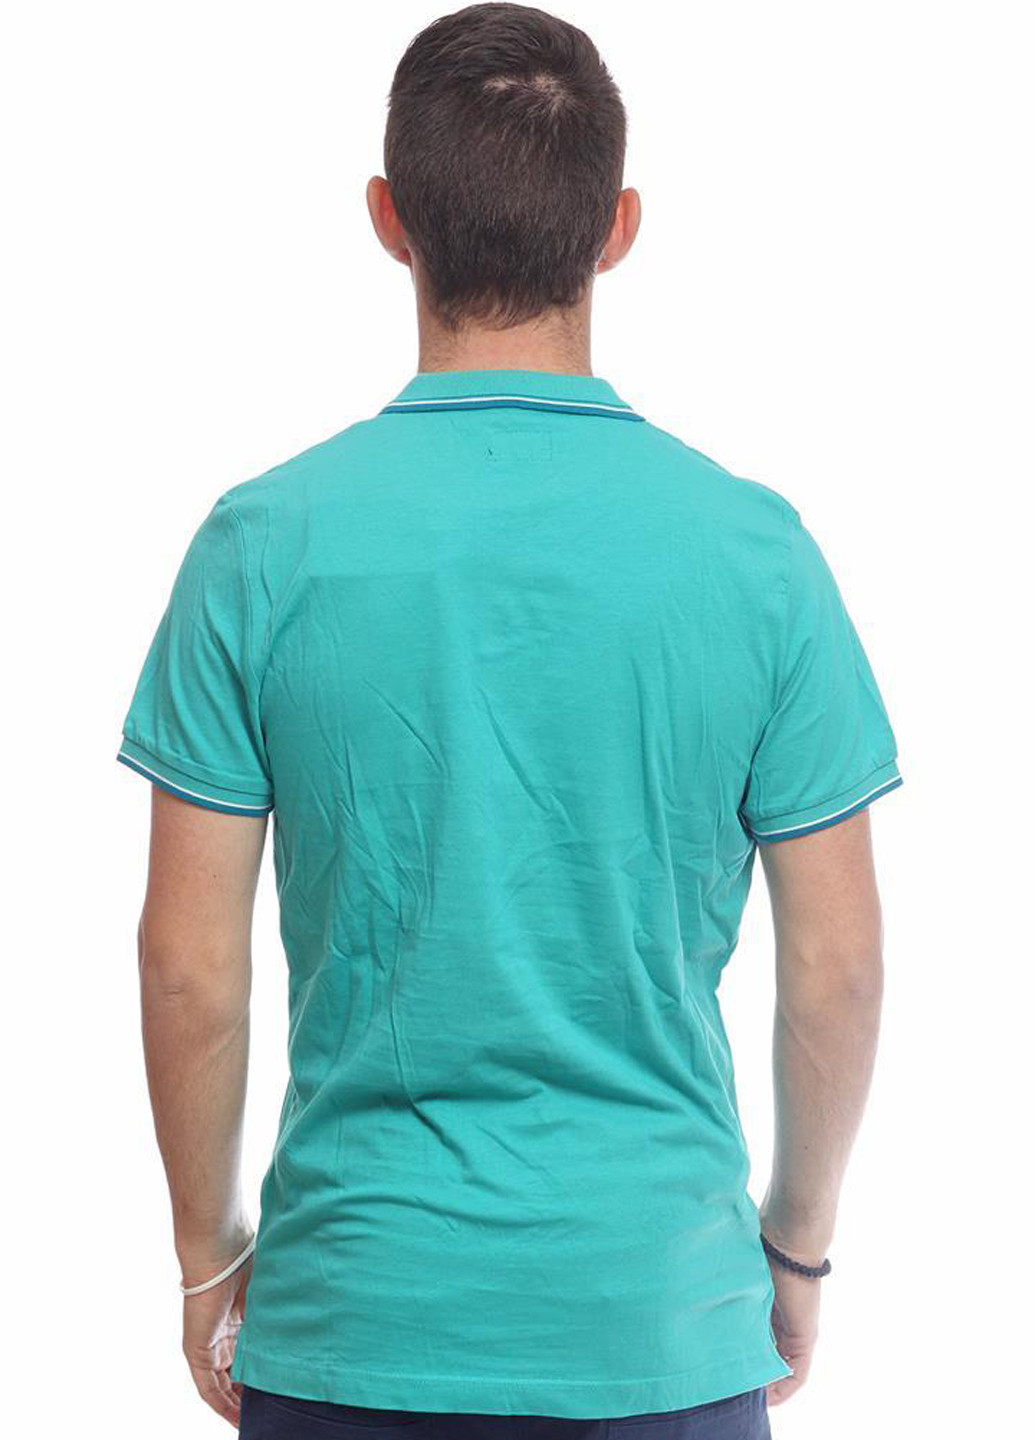 Бирюзовая футболка-поло для мужчин Kenvelo однотонная